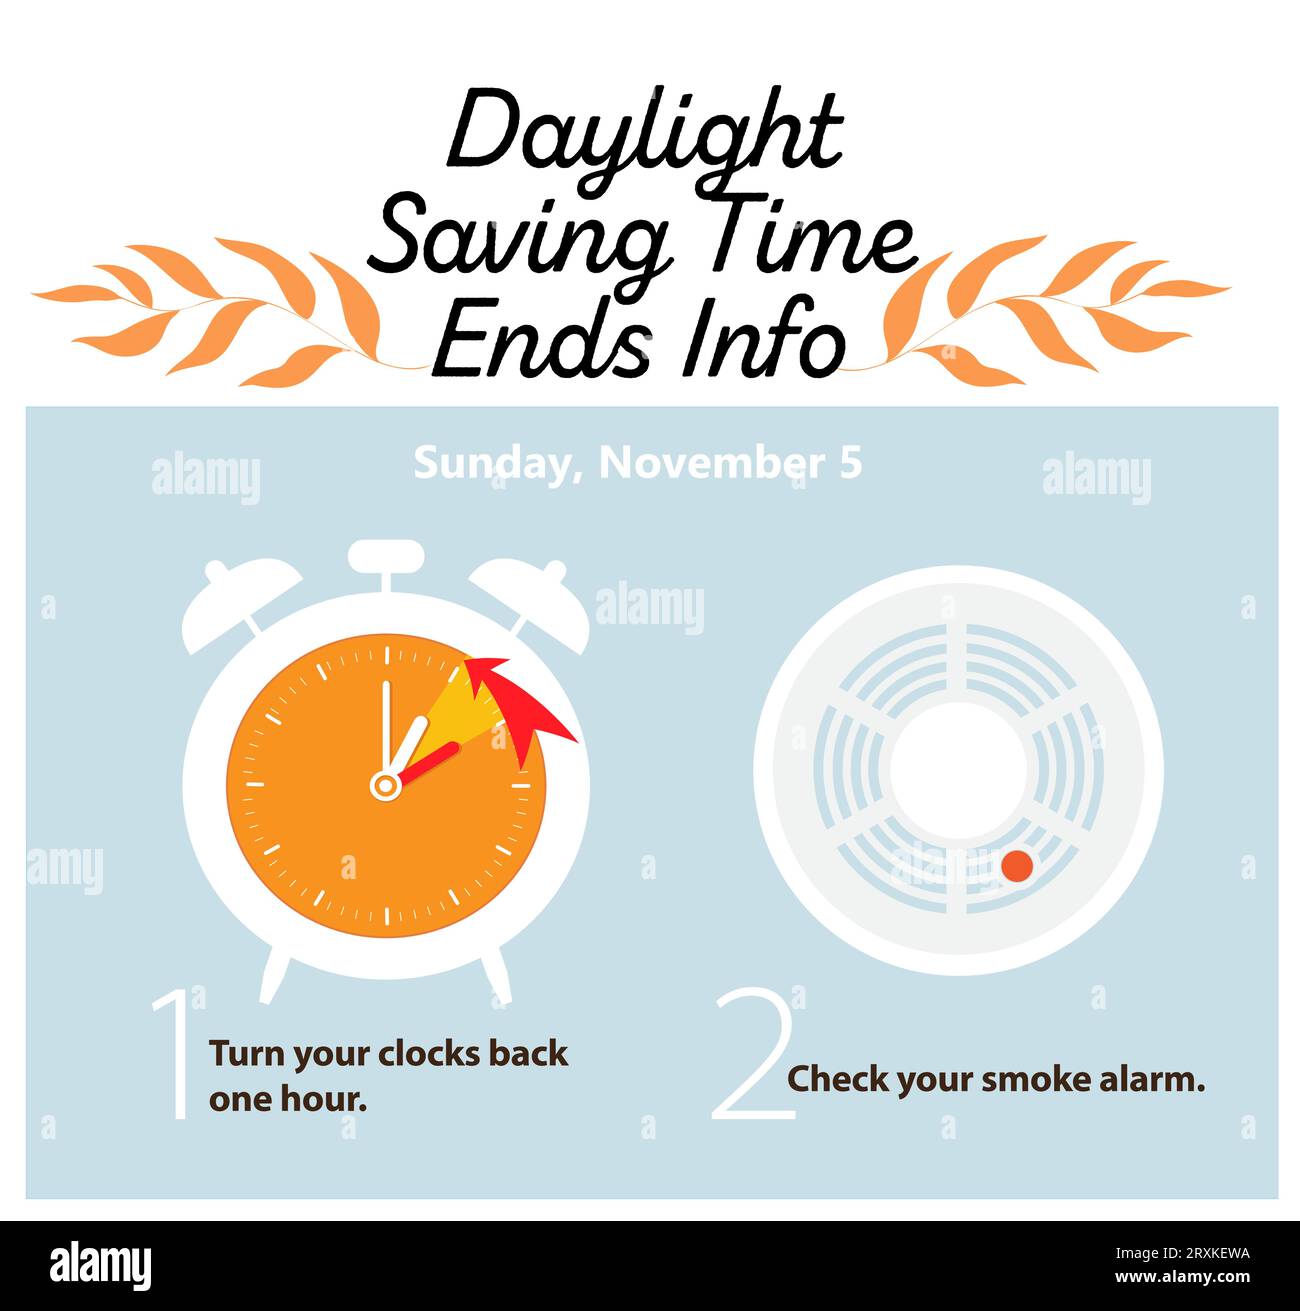 Check Your Smoke Detectors on Daylight Saving Day - Changing Smoke